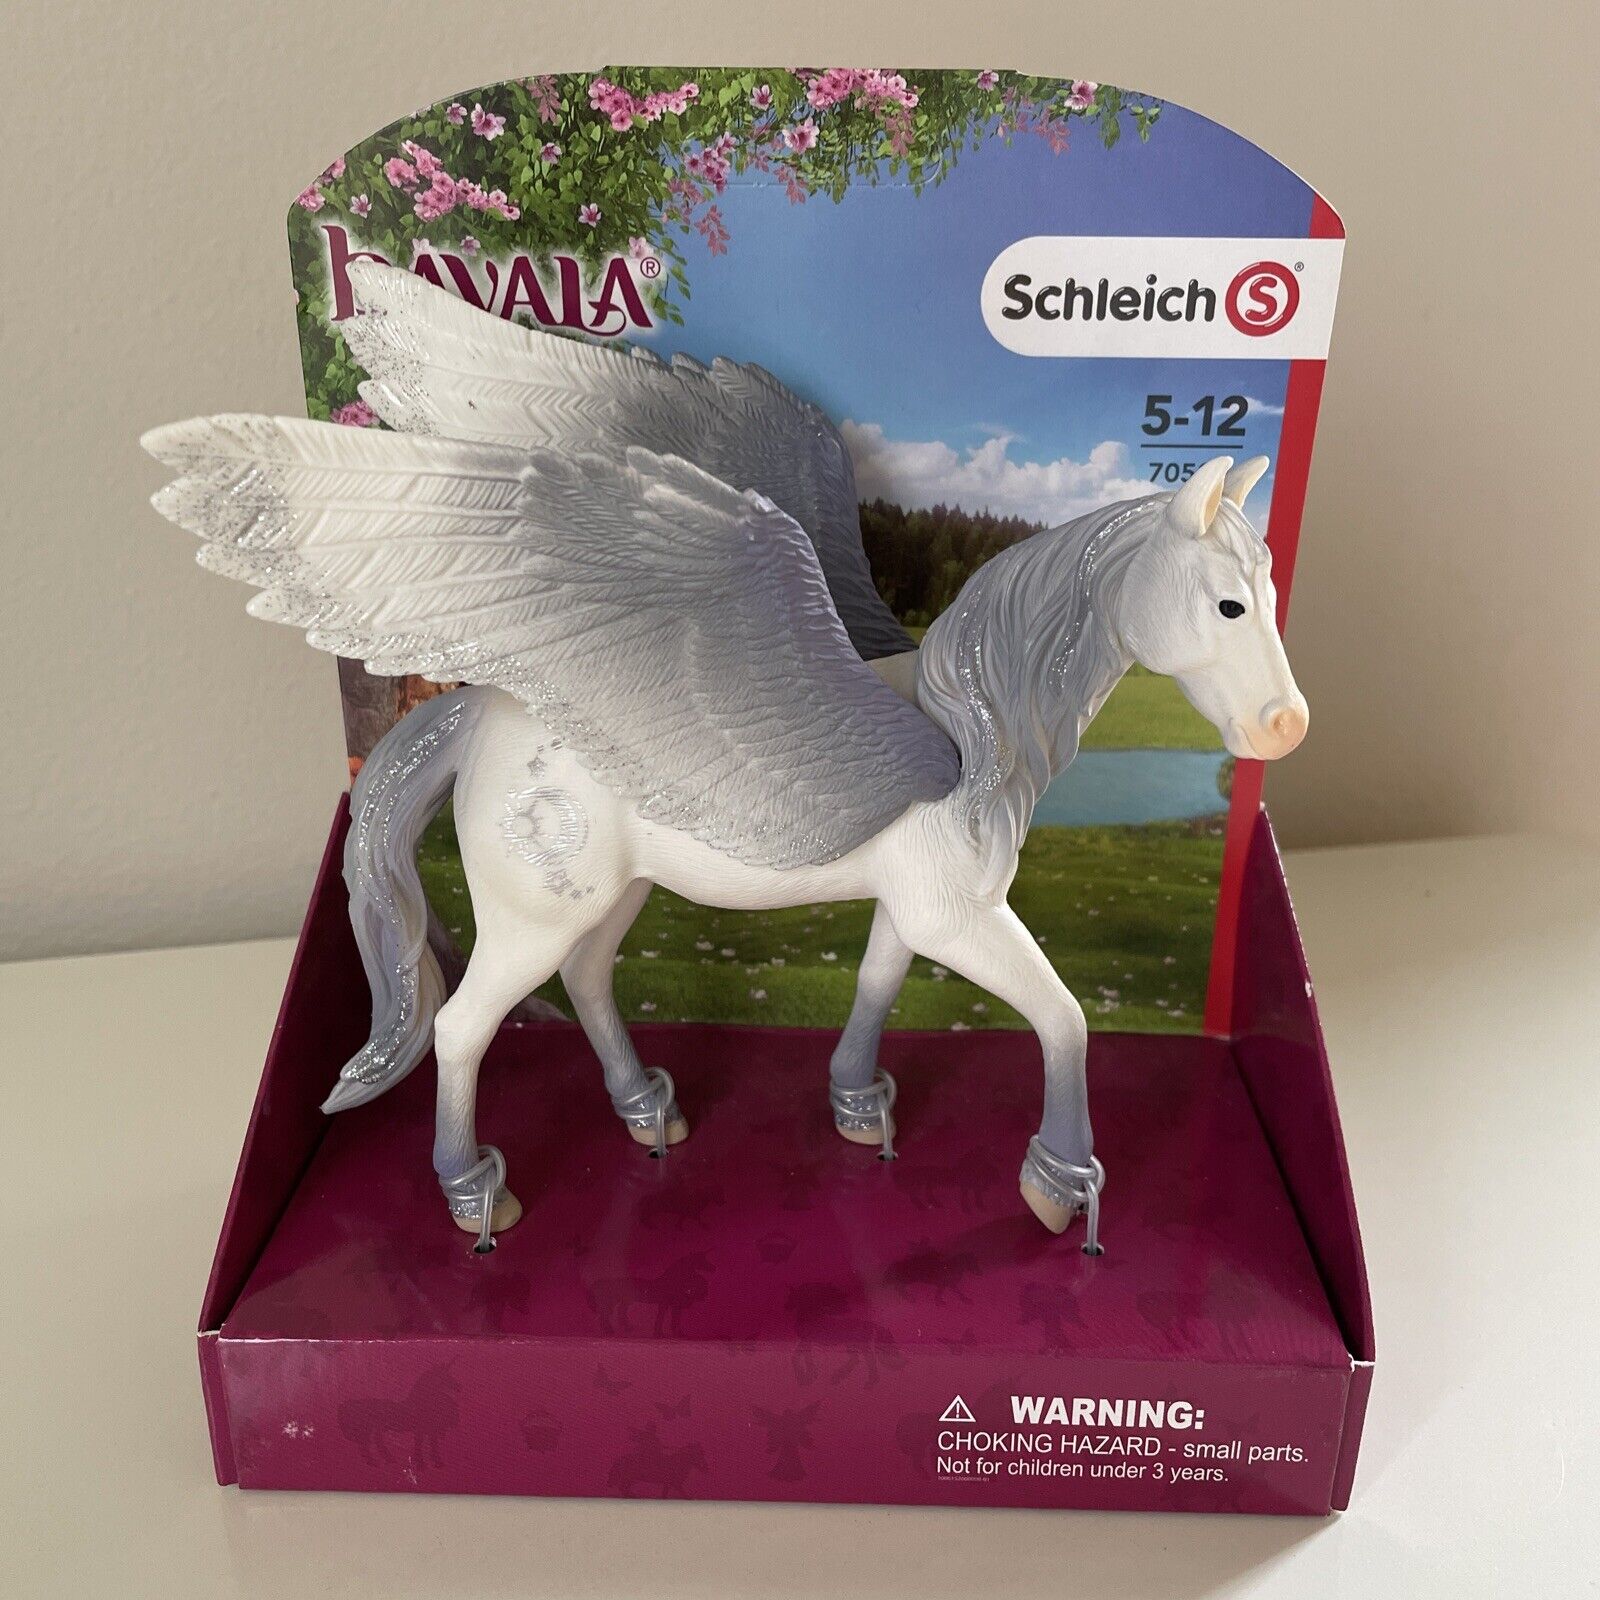 Schleich Bayala PEGASUS Horse World of Elves 70522 New in Original Package